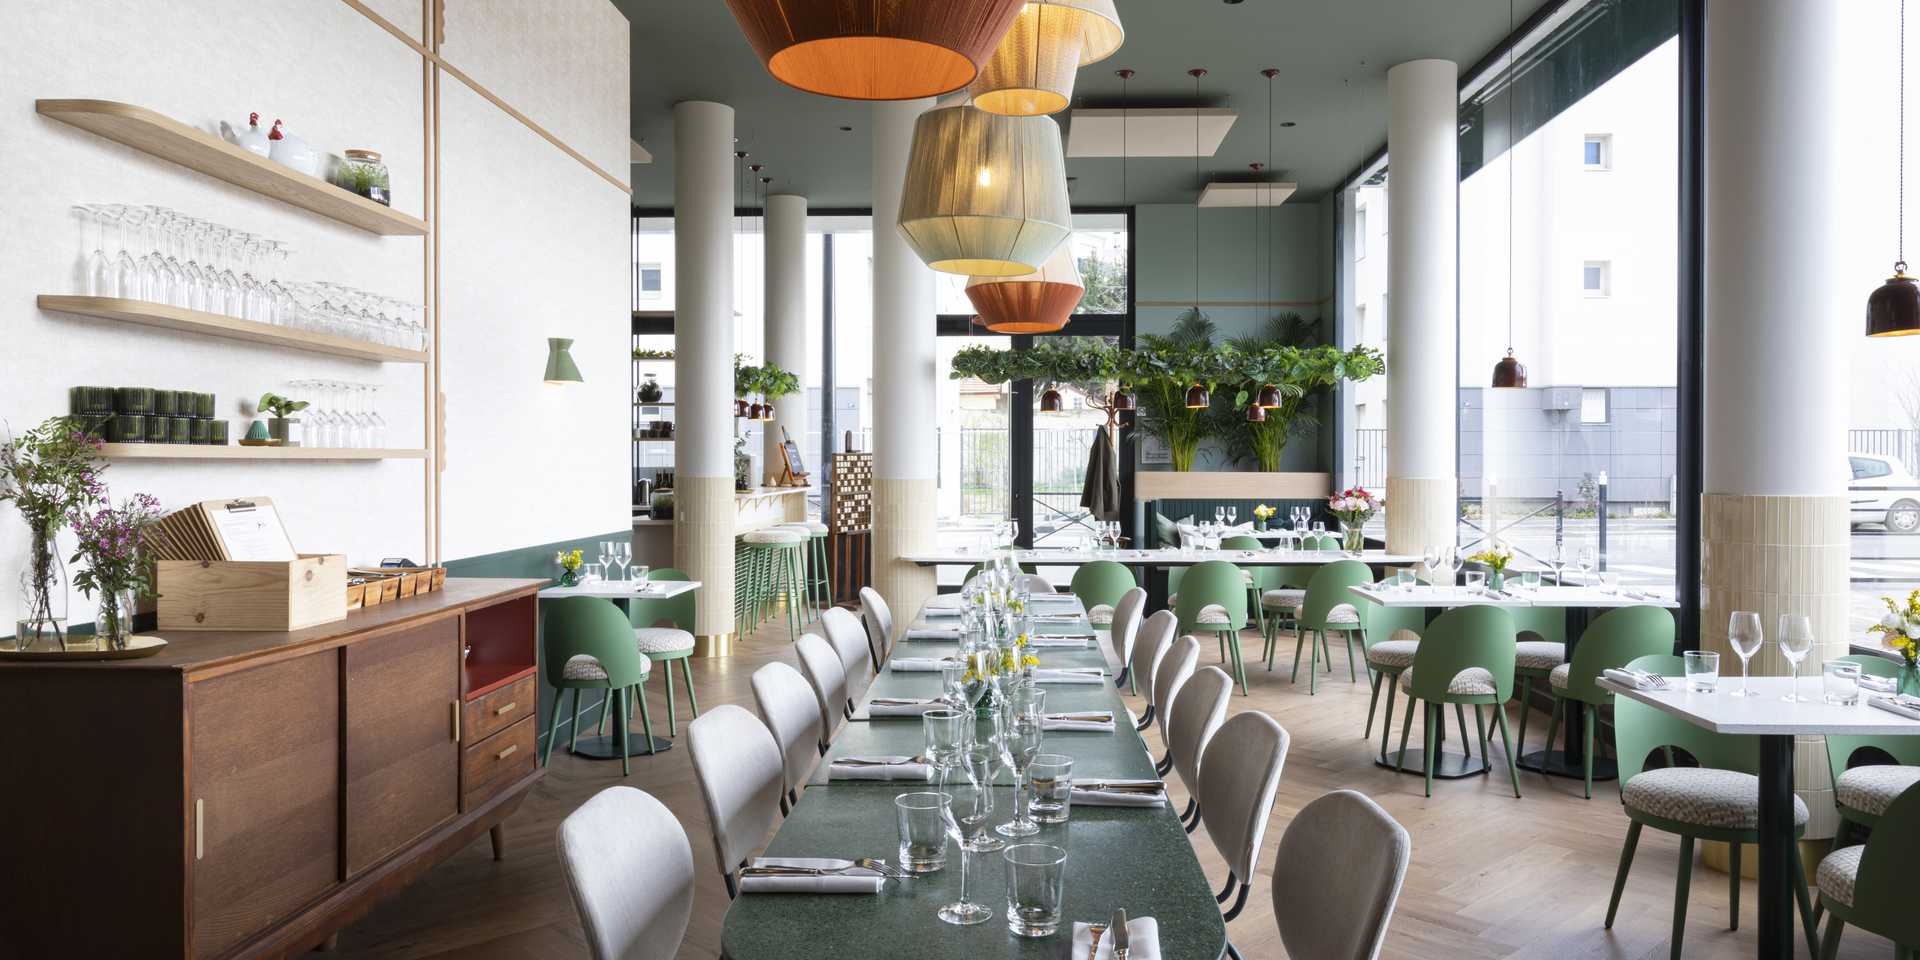 Bistronomic restaurant in Brussels designed by an interior designer